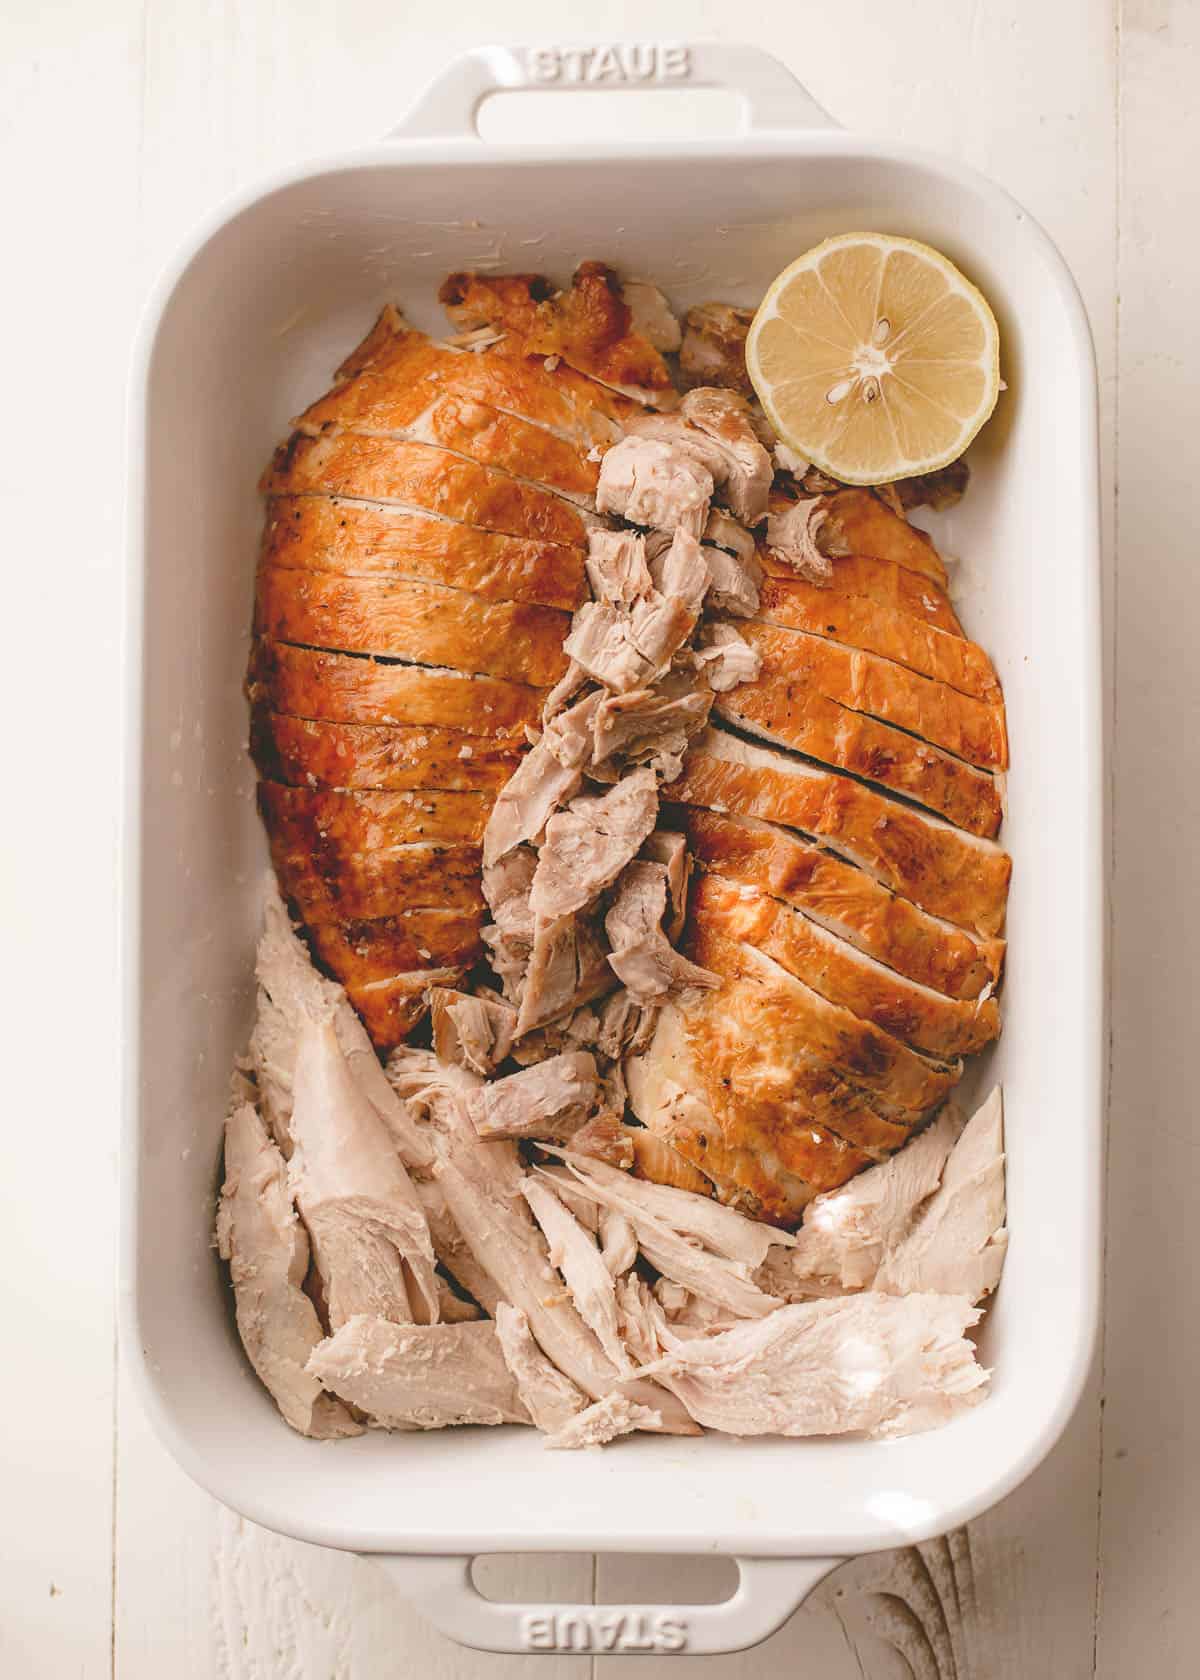 a sliced turkey in a white rectangular baking dish